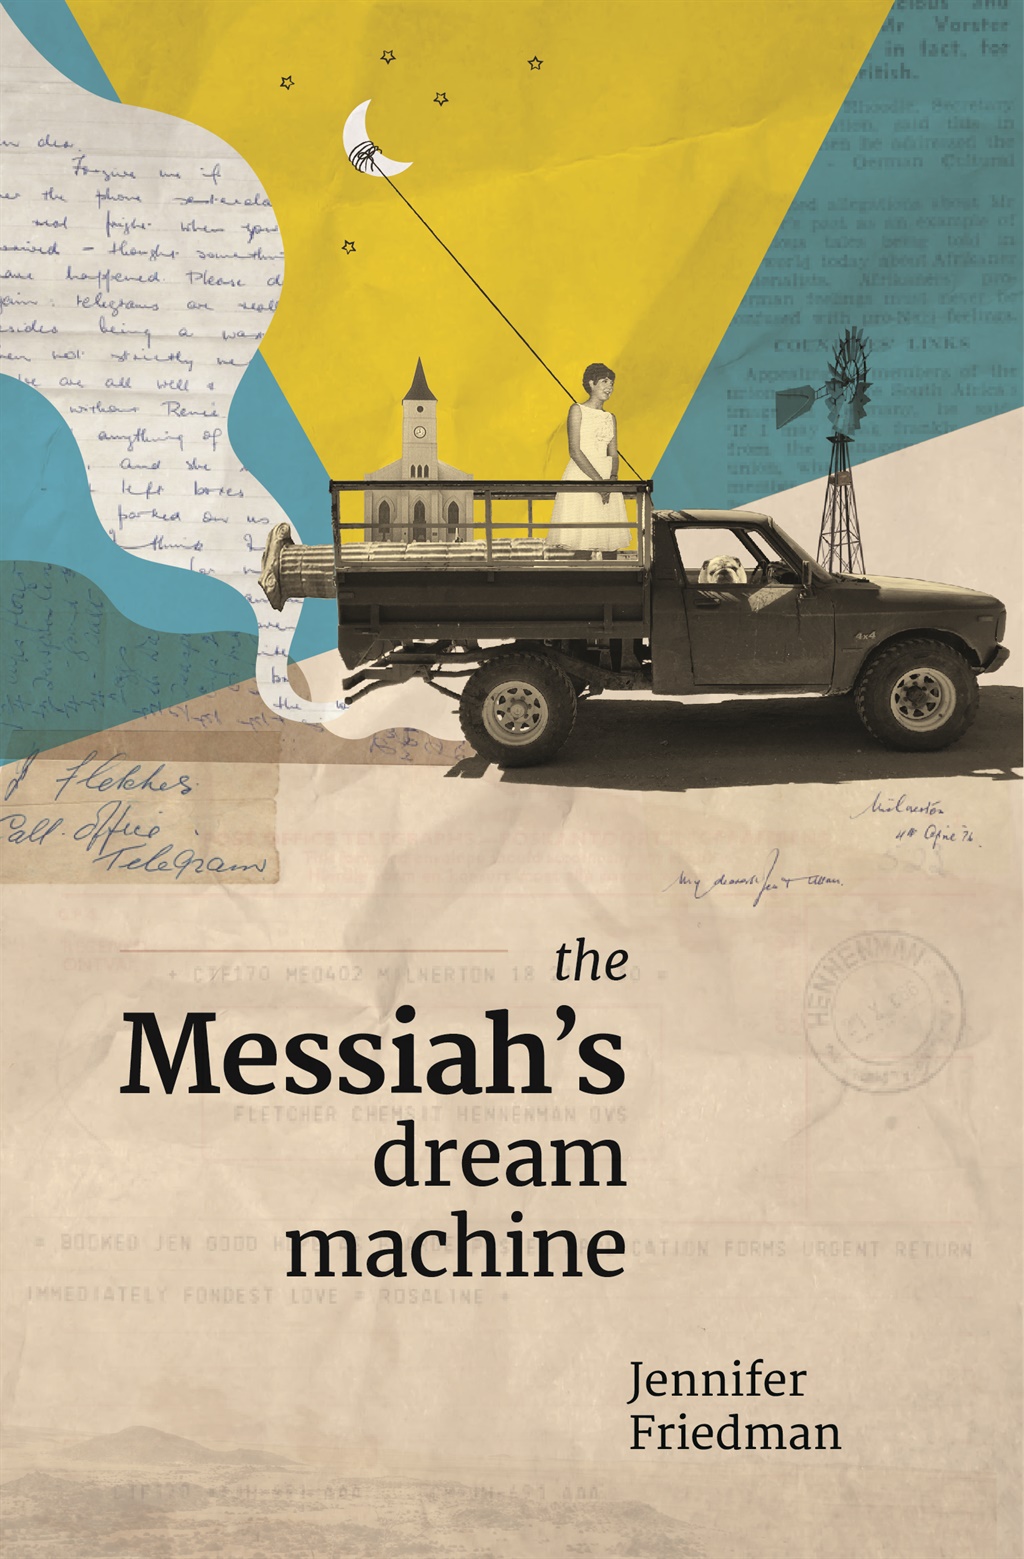 The Messiah's Dream Machine by Jennifer Friedman, published by NB Publishers.